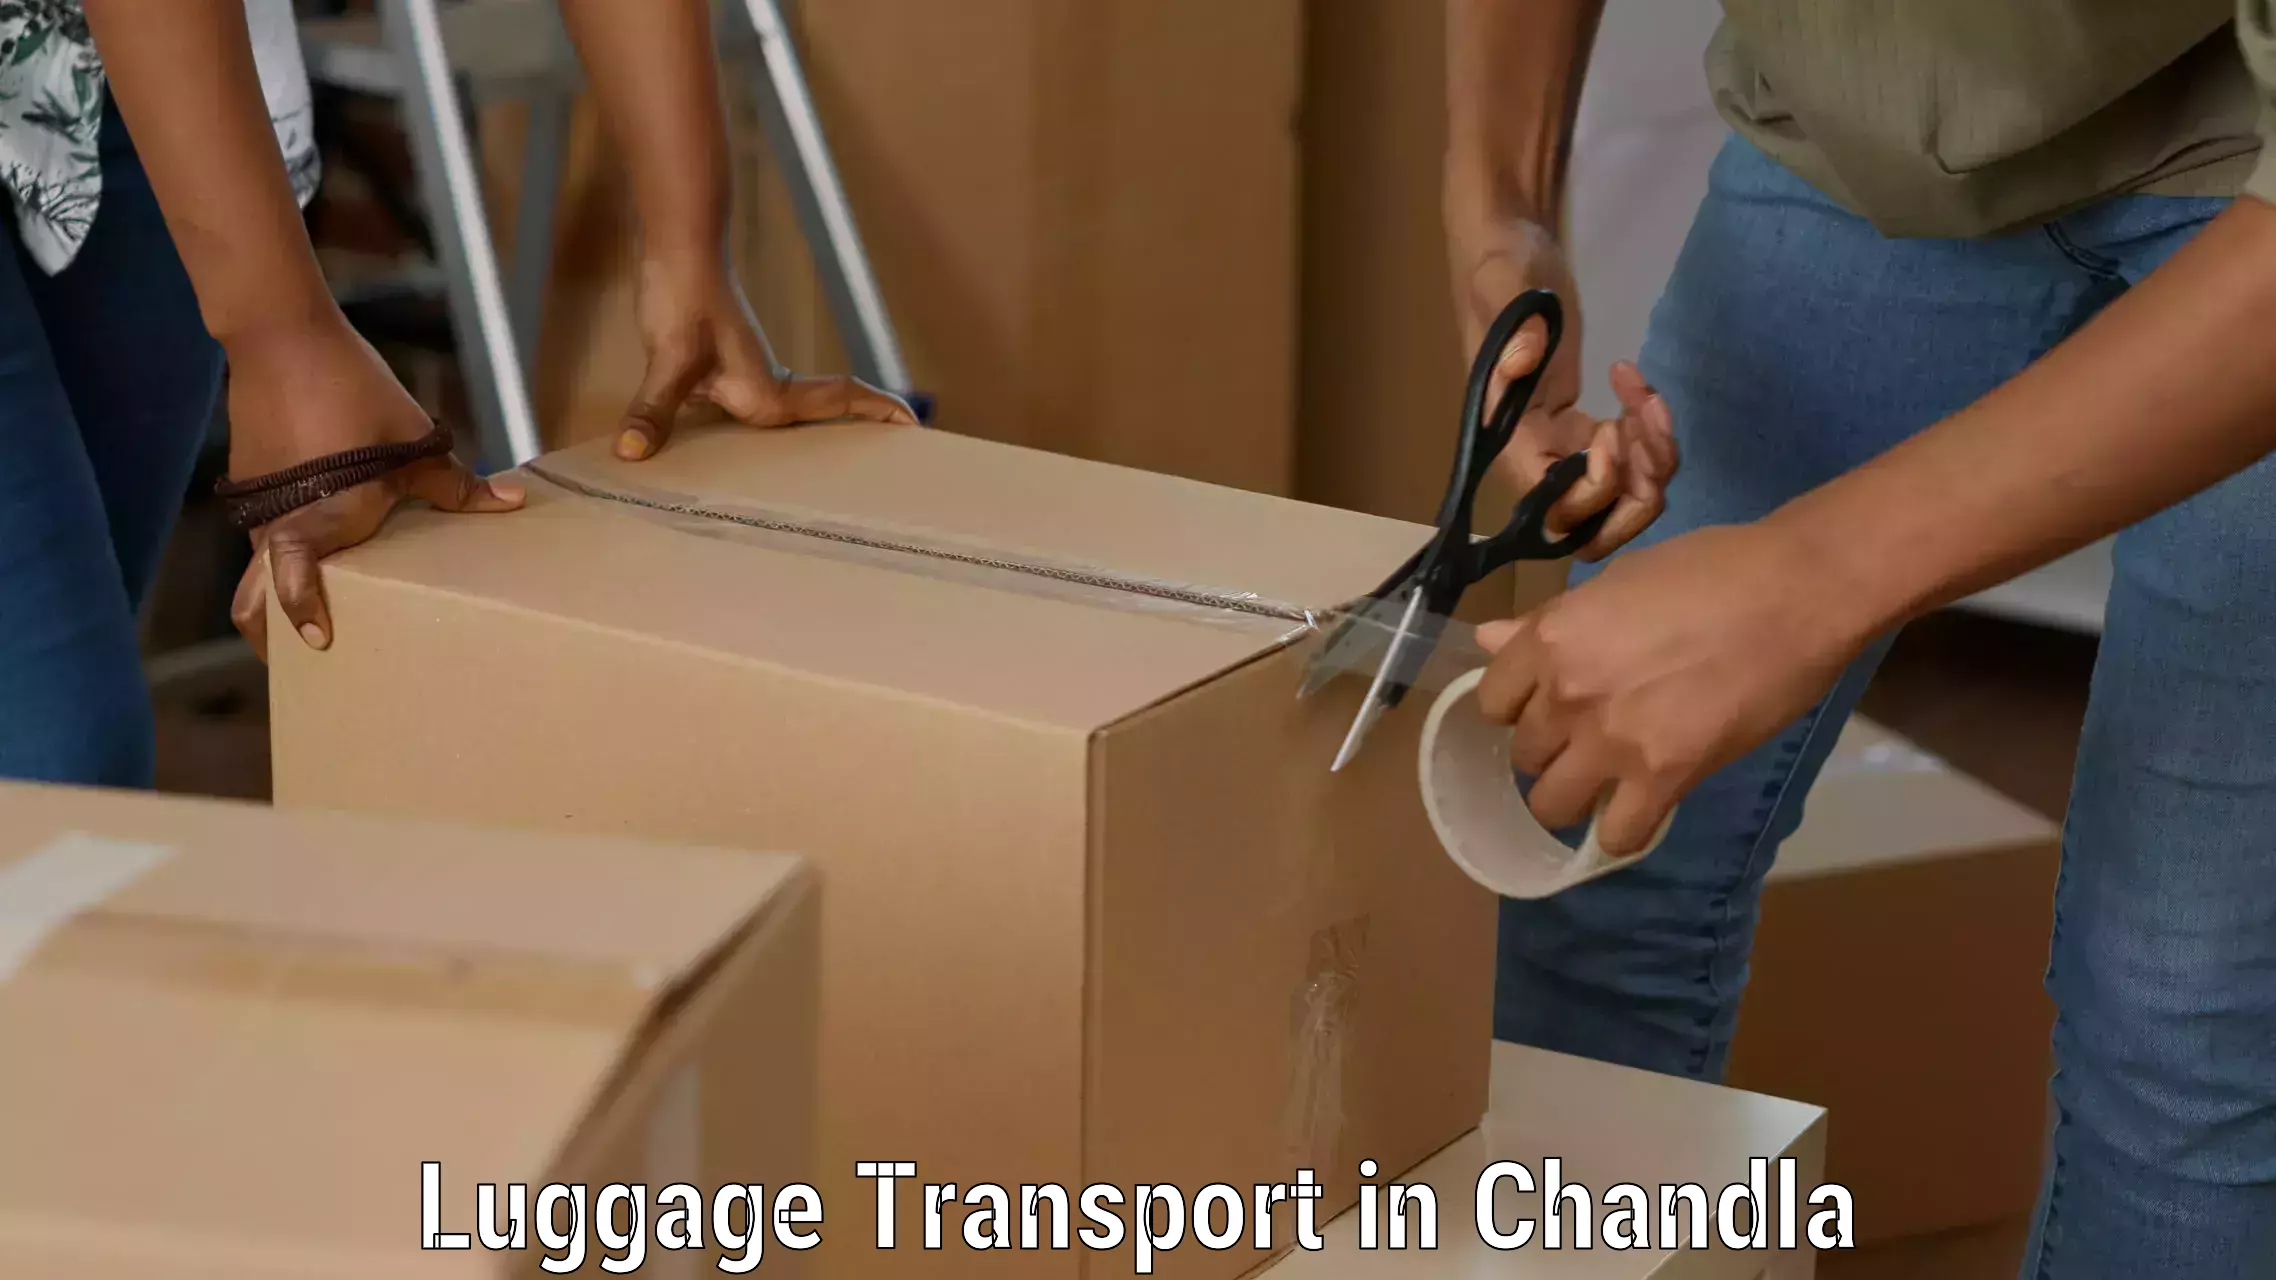 Luggage shipment tracking in Chandla